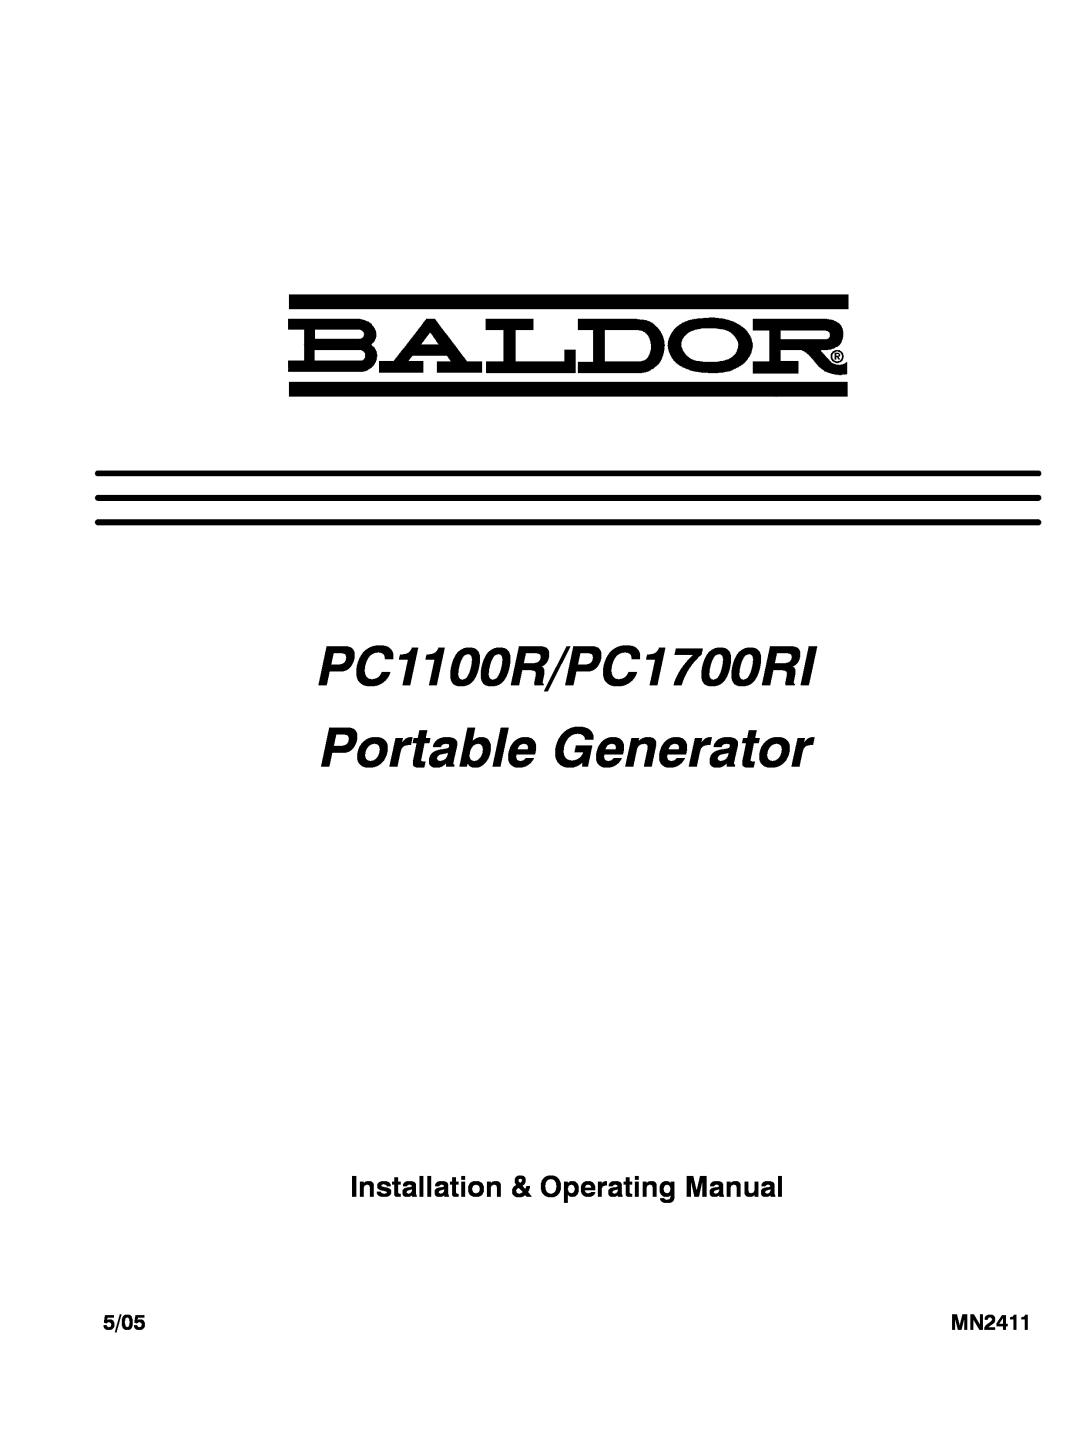 Baldor manual PC1100R/PC1700RI, Portable Generator, Installation & Operating Manual, 5/05, MN2411 